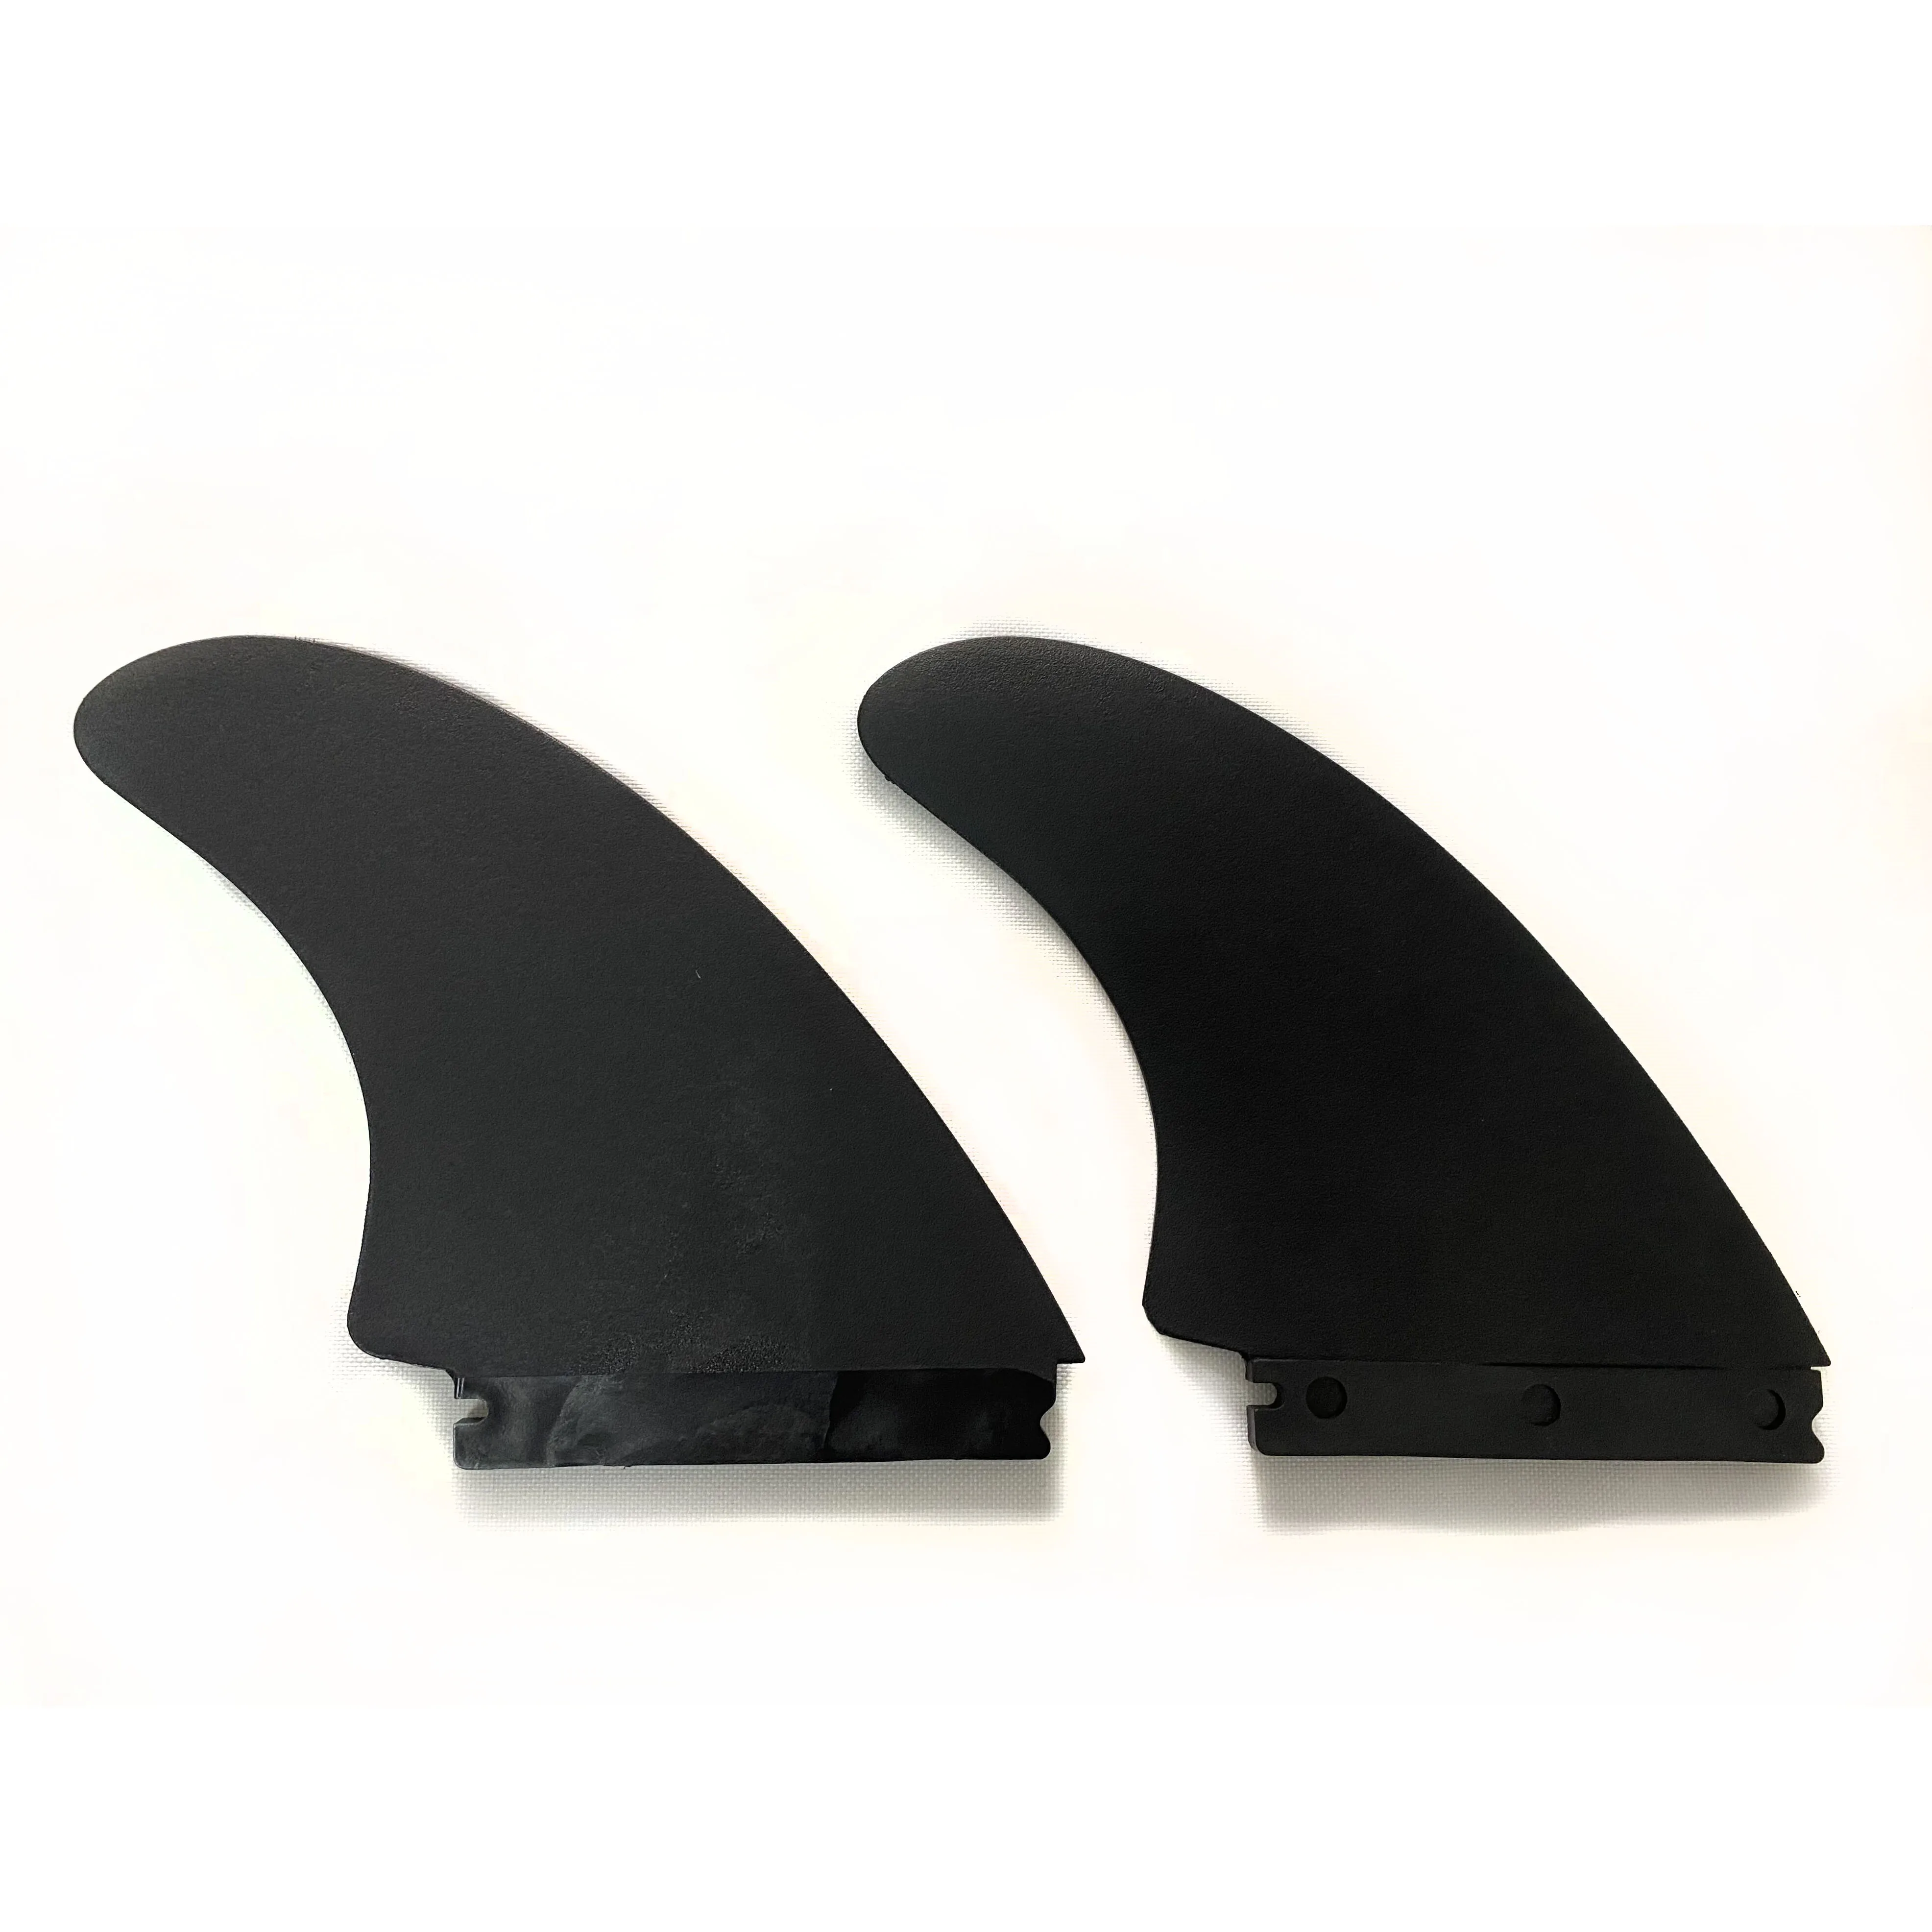 

Cheap Plastic Nylon Surf Surfboard Futures Upright Twin Fins, Black